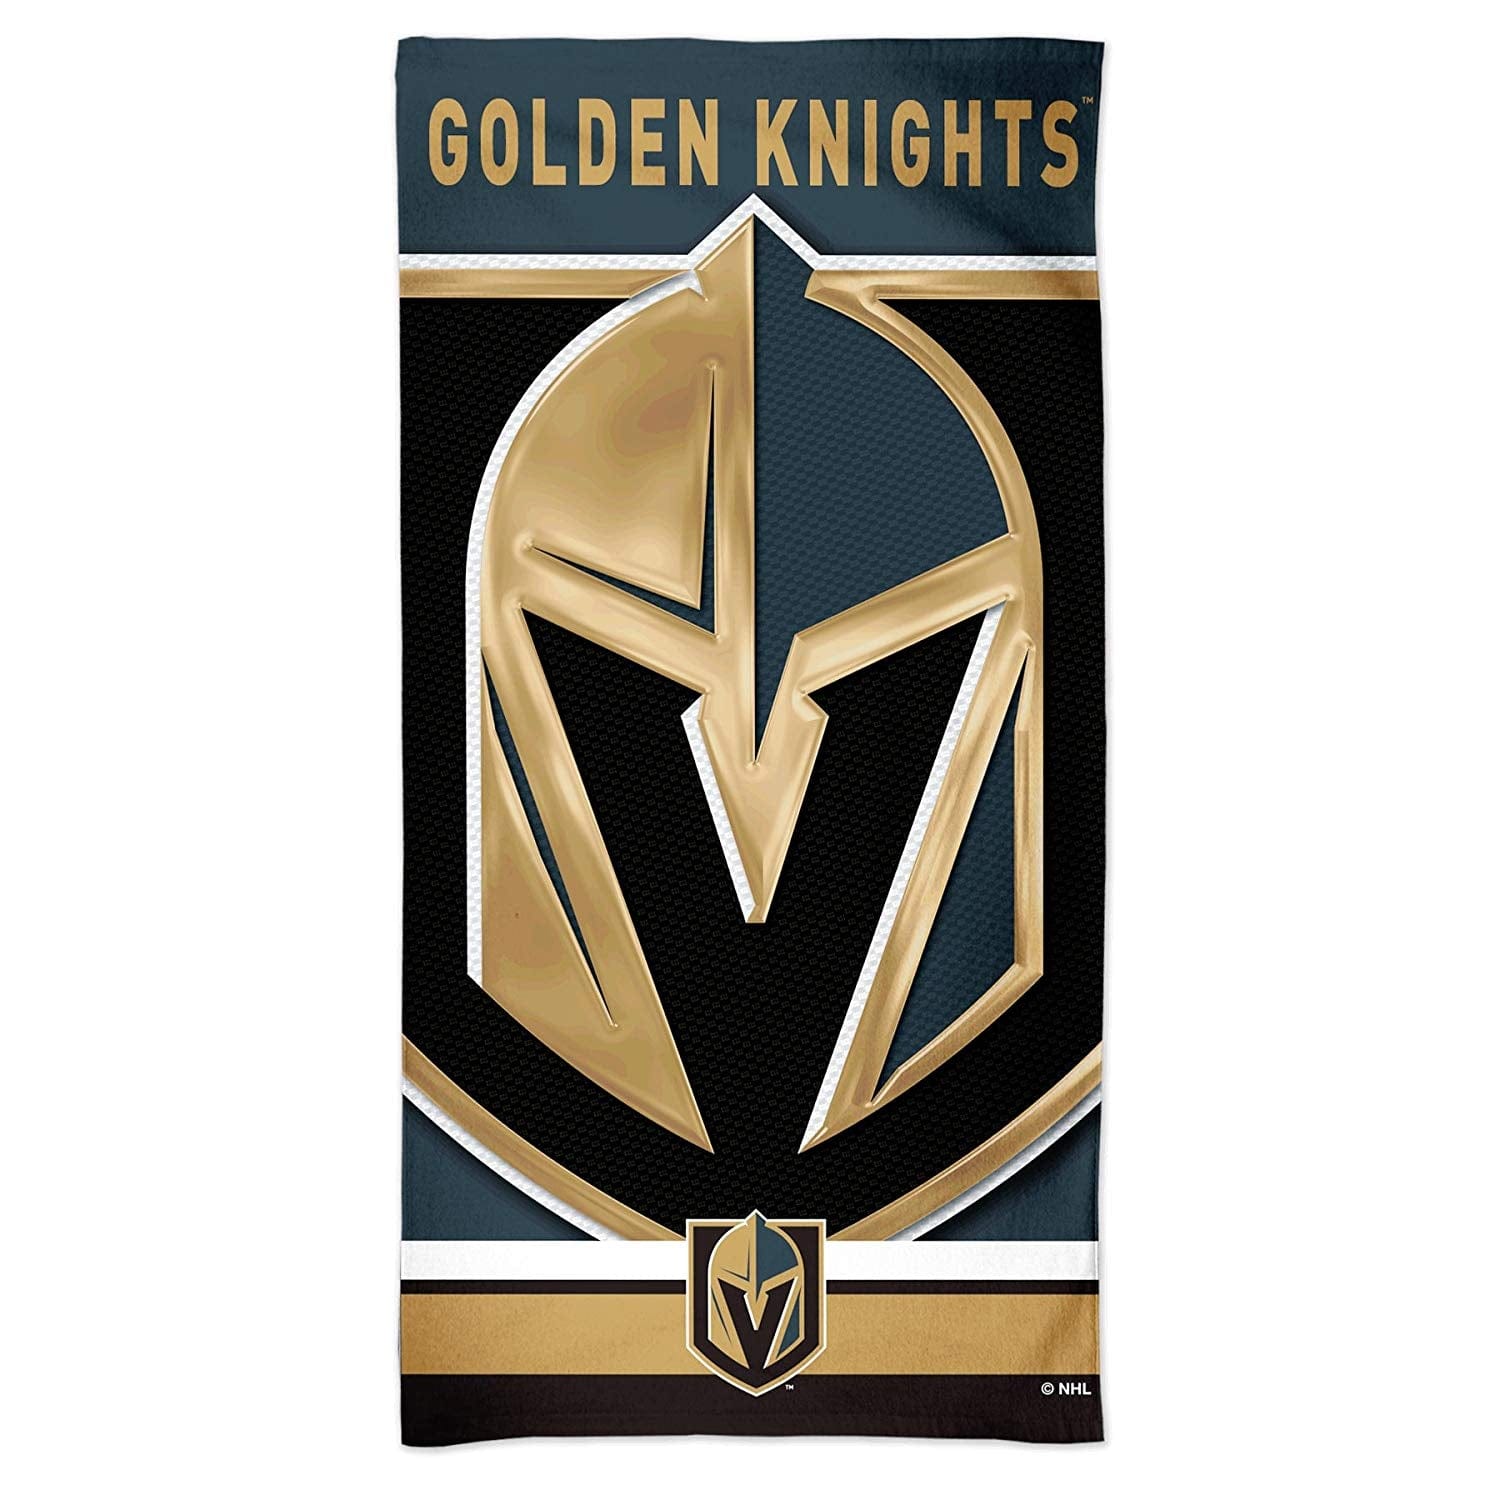 2023 Stanley Cup Champions Vegas Golden Knights Metallic Black Out Lic -  Vegas Sports Shop